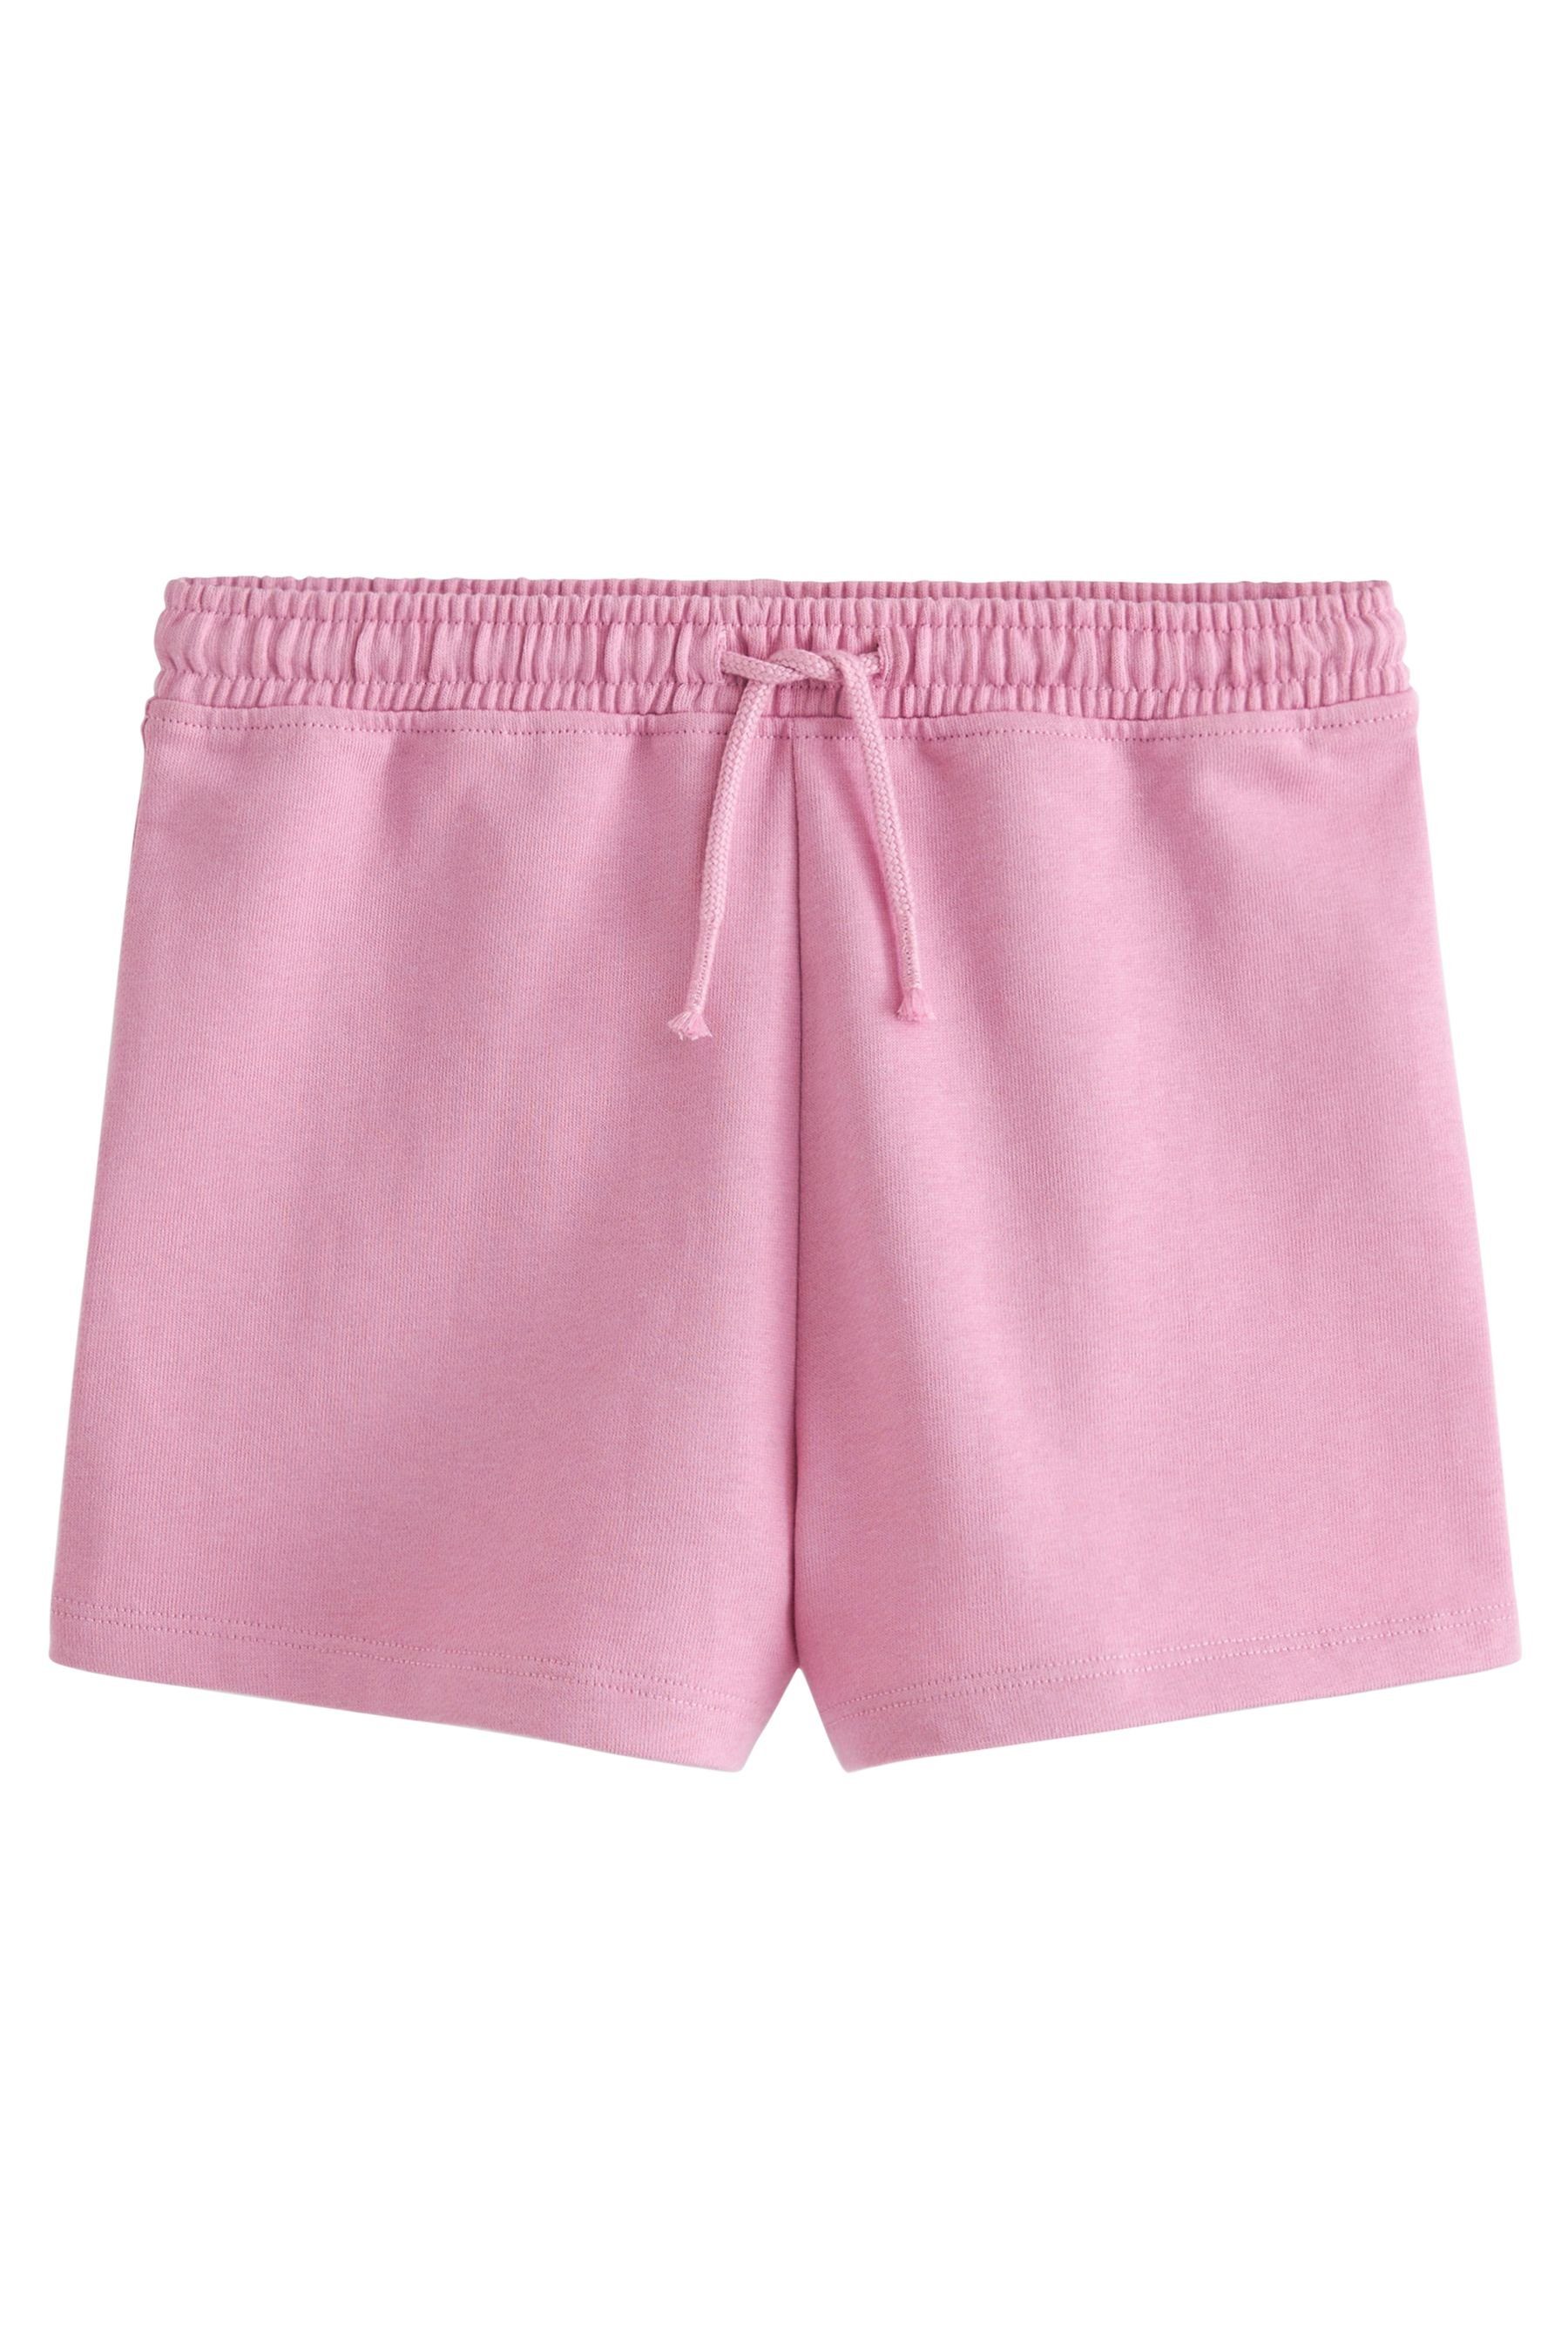 (3-tlg) Green/White 3er-Pack Pink/Mint Baumwolljersey, Sweatshorts Next Pastel aus Shorts